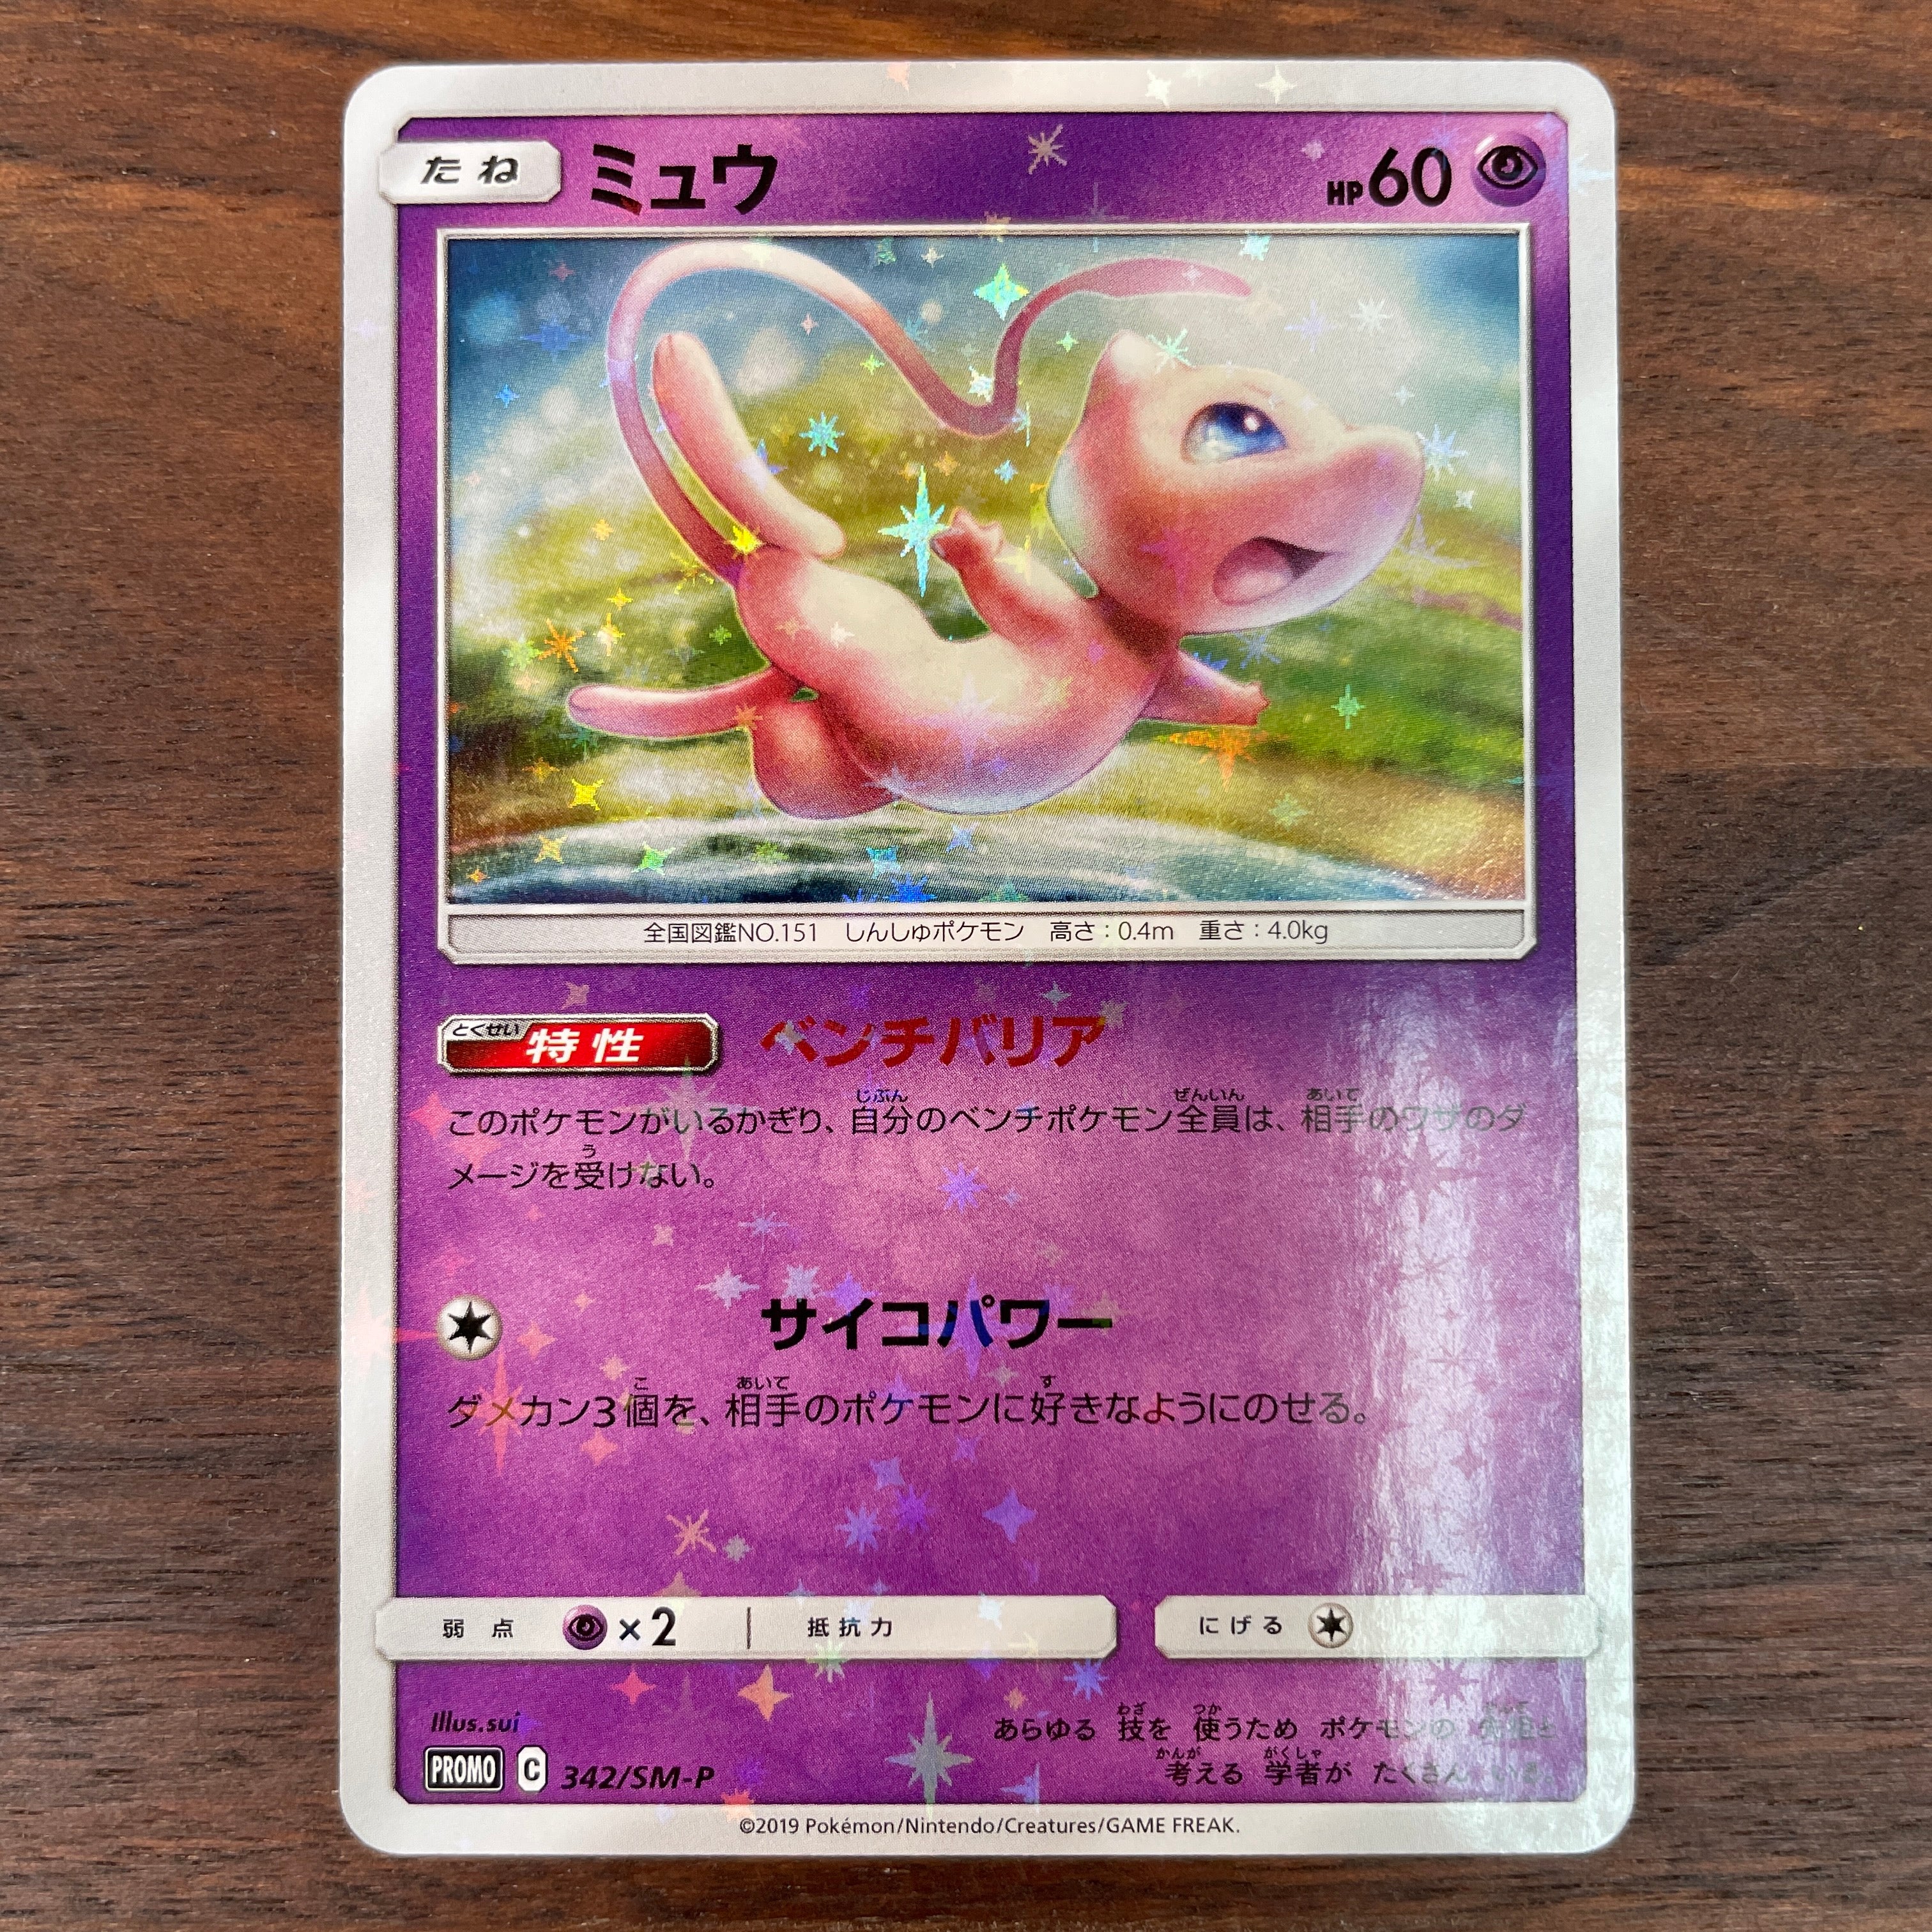 Pokémon Card Game 342/SM-P promotional card  Mew